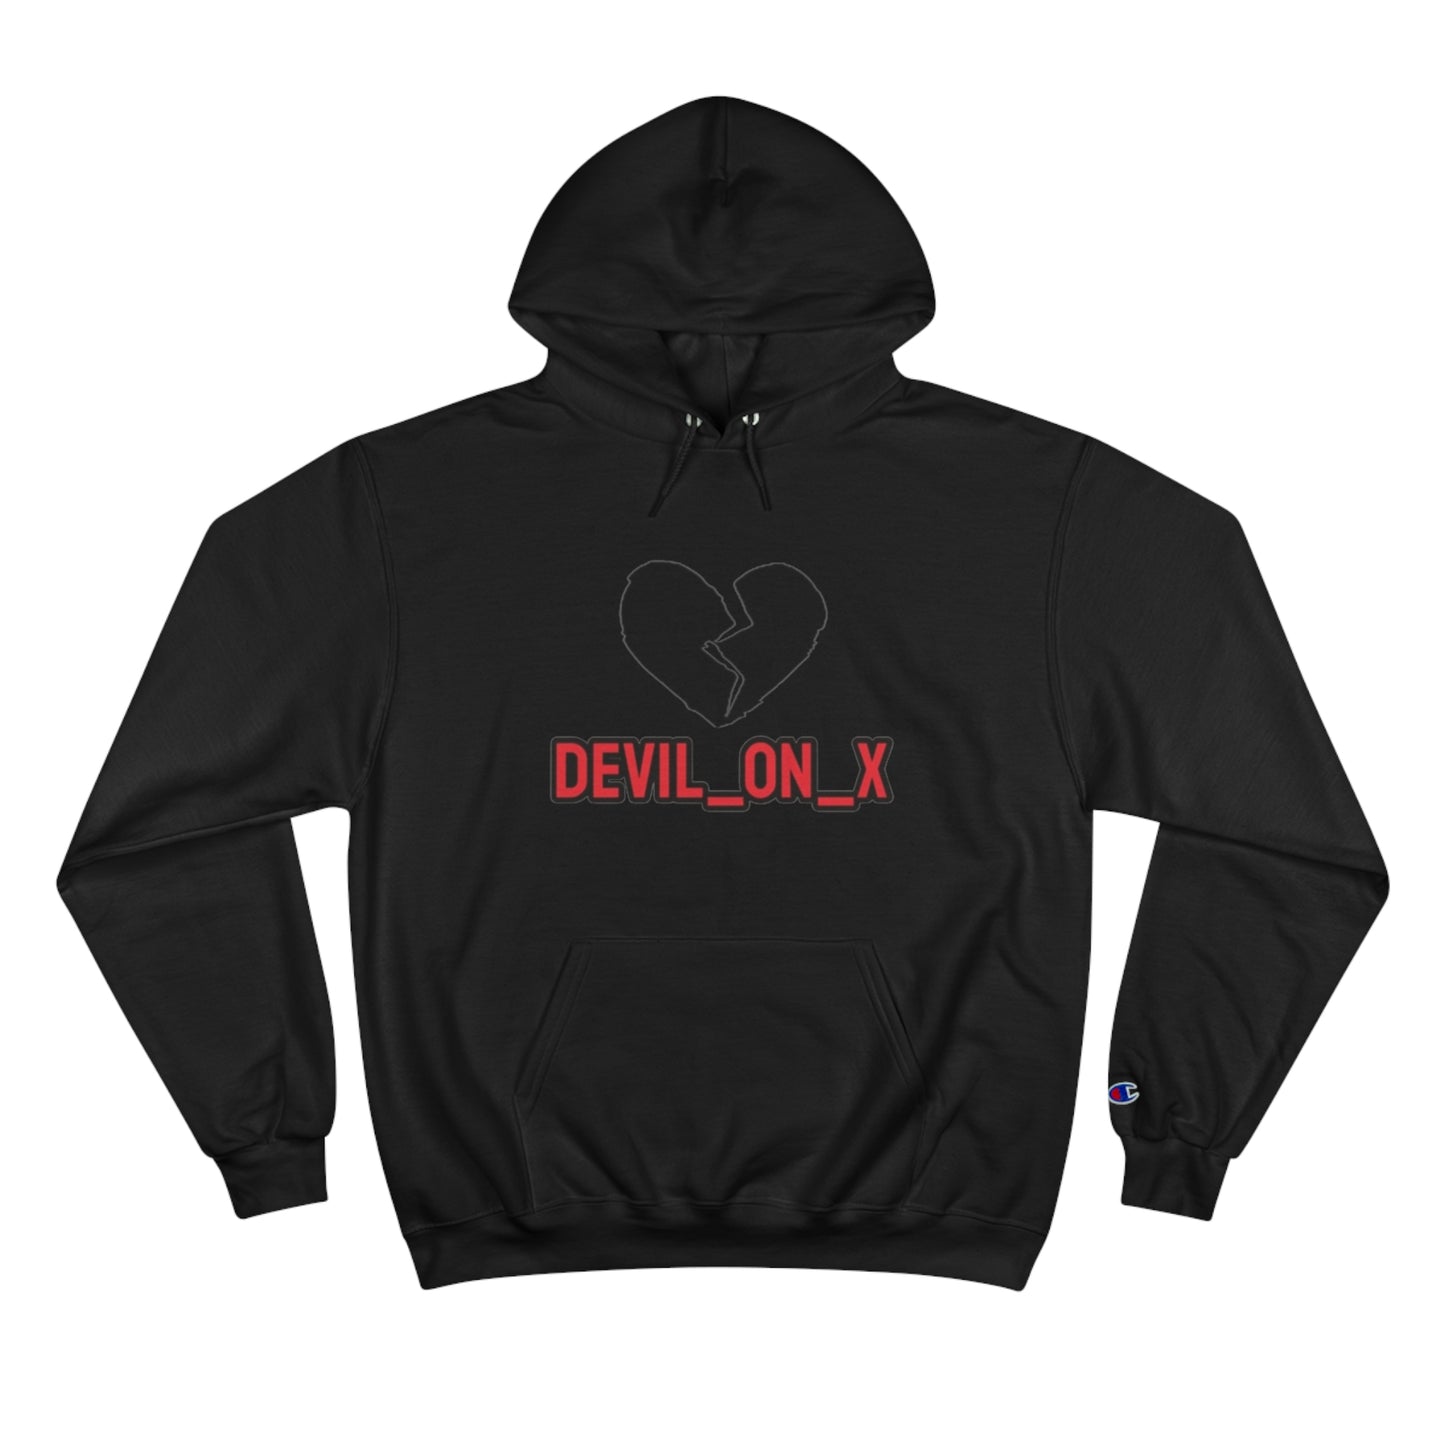 Devil-on_x Champion Hoodie